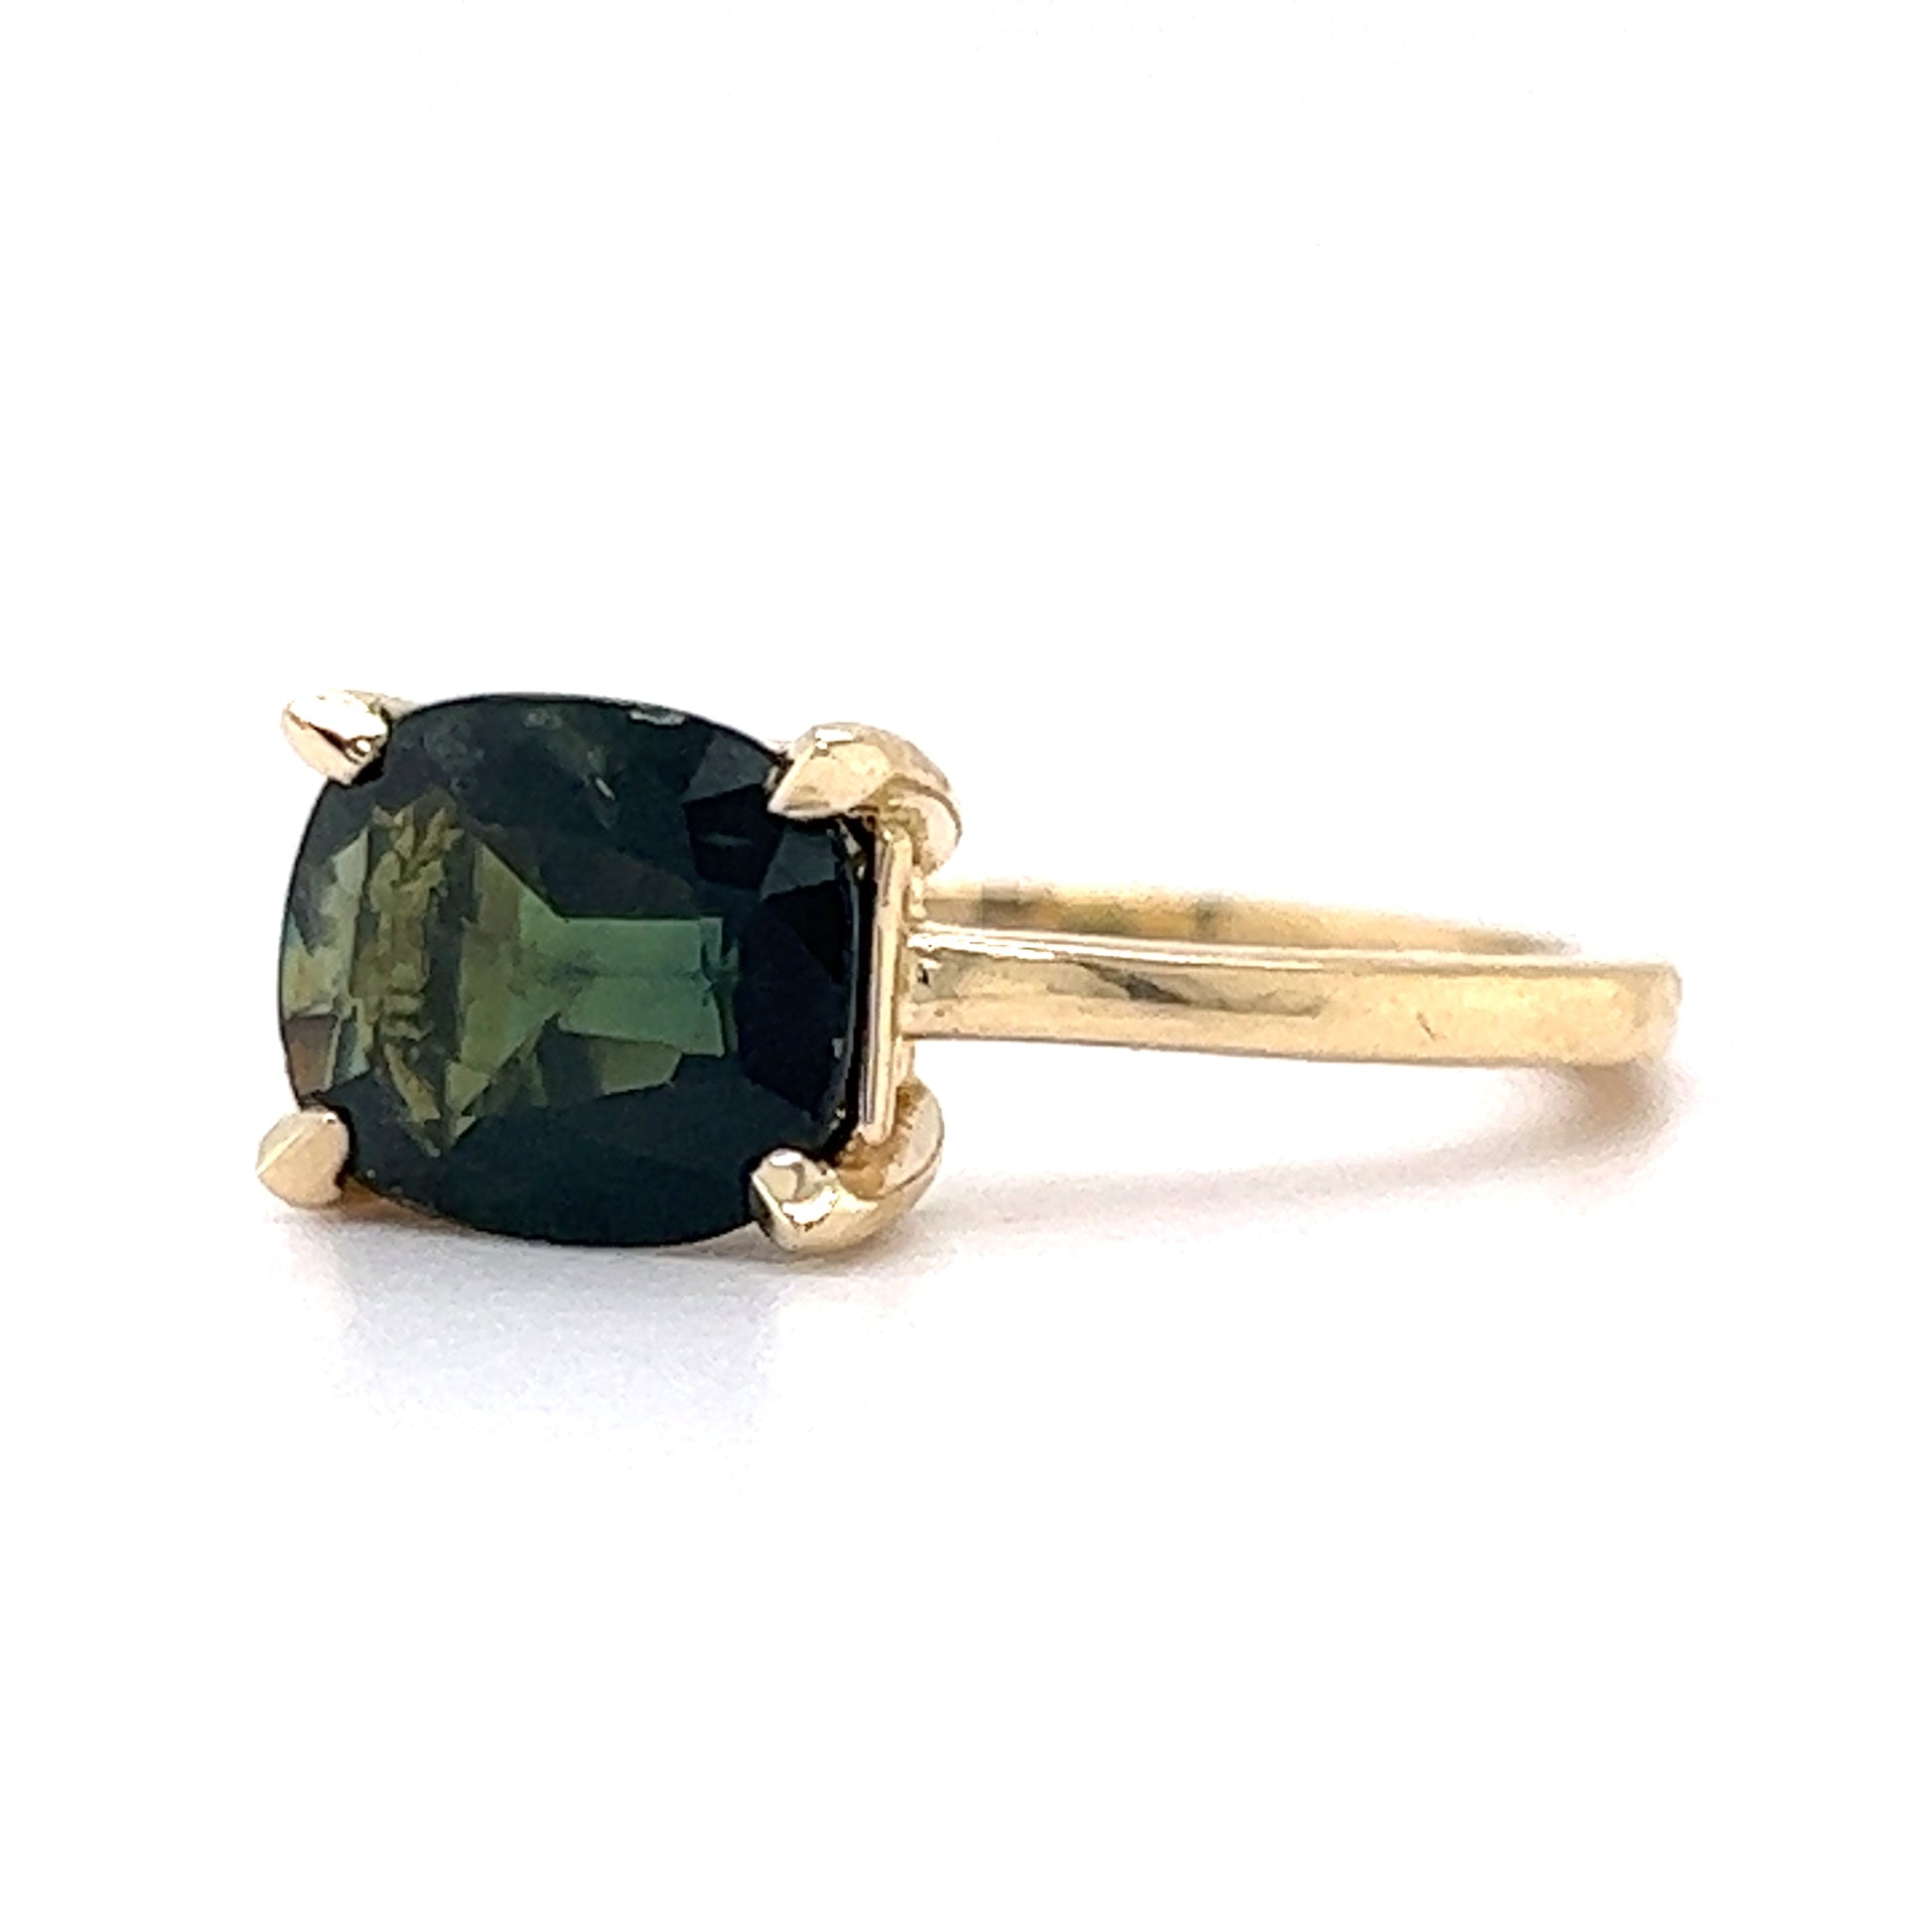 2.39 Cushion Cut Green Tourmaline Engagement Ring in 14k Yellow GoldComposition: 14 Karat Yellow Gold Ring Size: 7.0 Total Gram Weight: 3.5 g Inscription: 14K
      